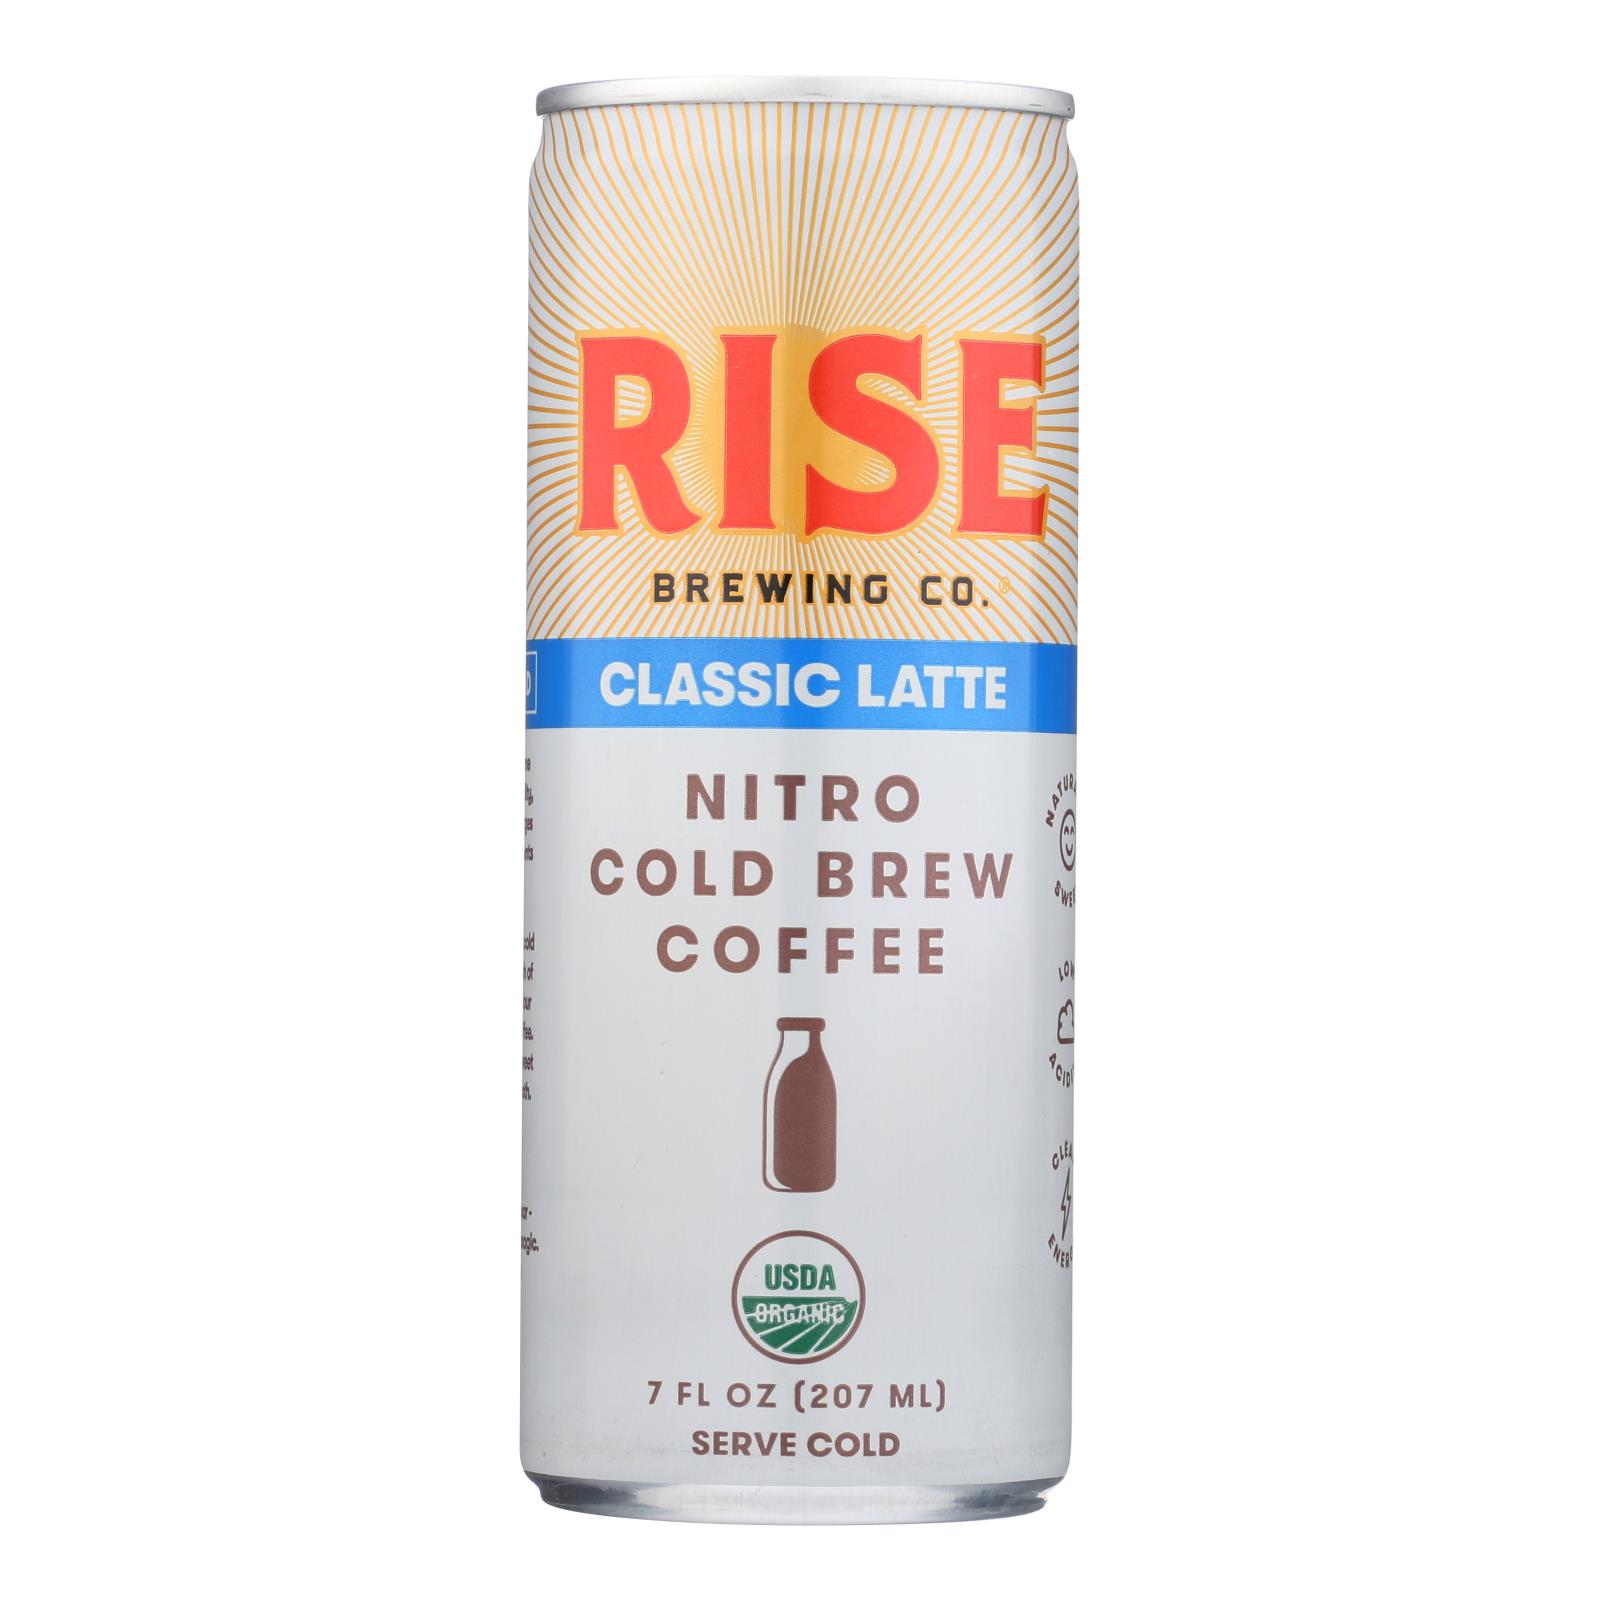 Rise Brewing Co. Classic Latte Nitro Cold Brew Coffee, Classic Latte - Case of 12 - 7 FZ